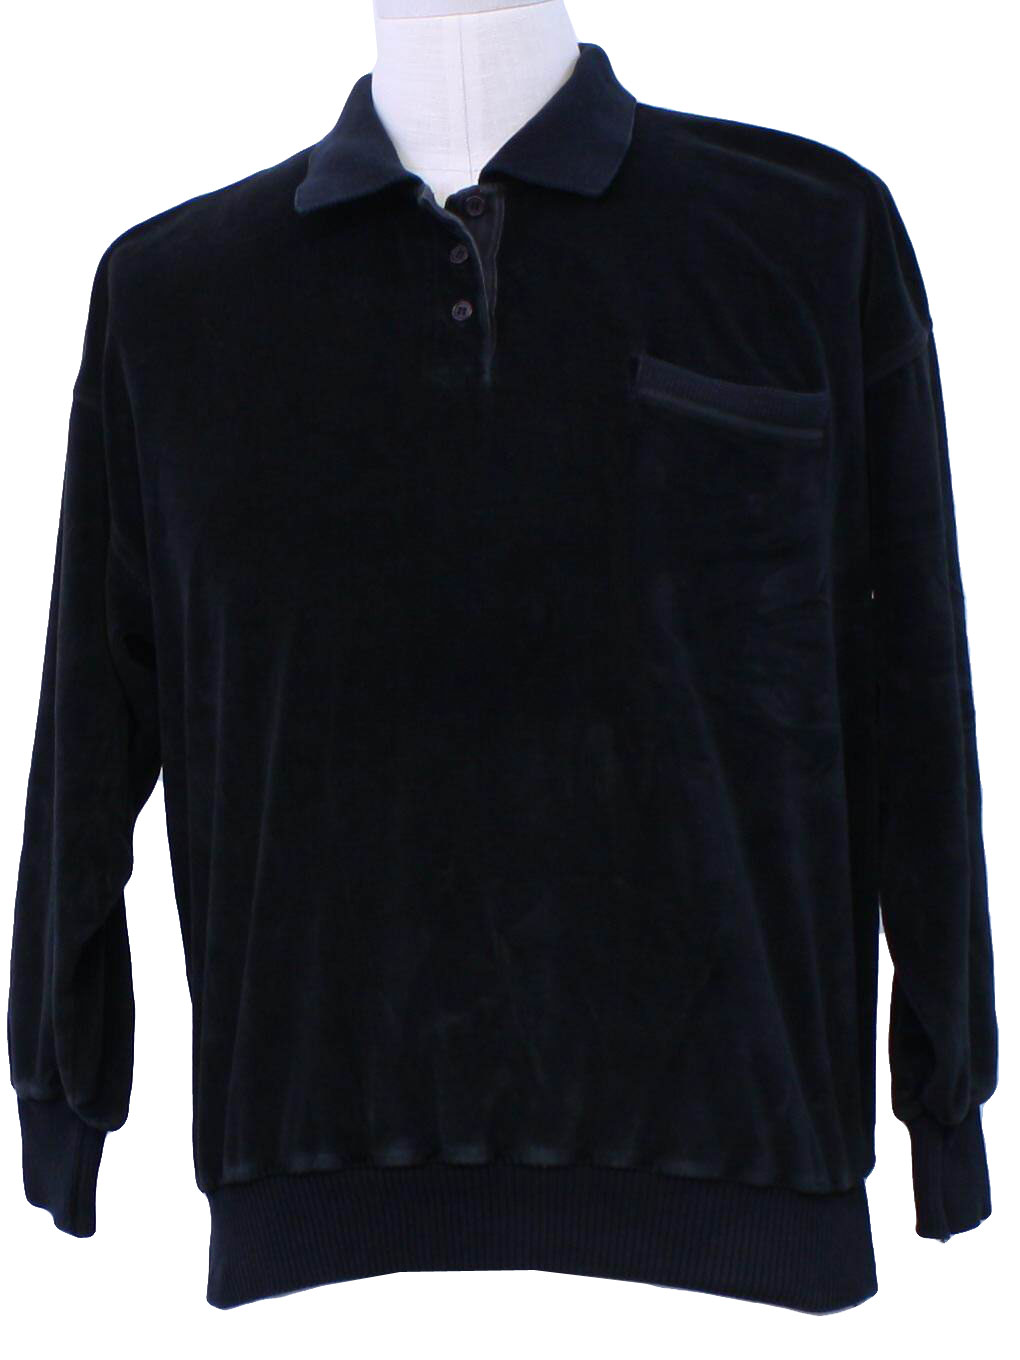 Retro 80's Velour Shirt: 80s -Lizsport- Mens black background cotton ...